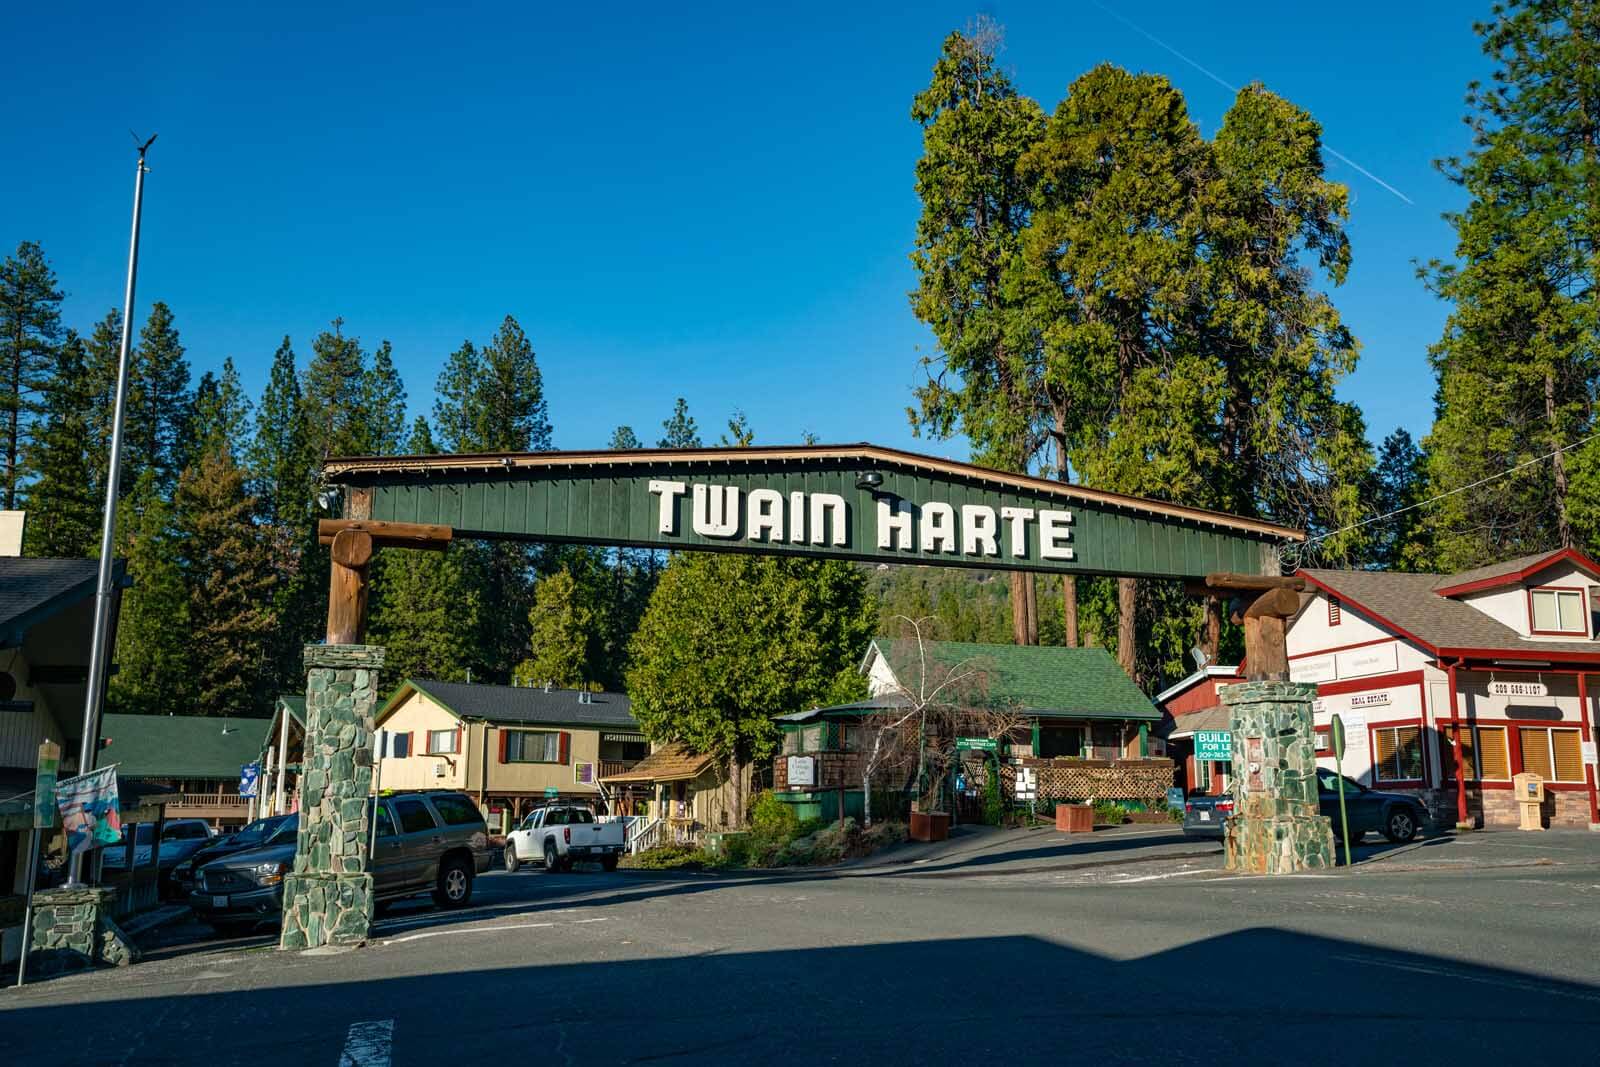 Twain Harte California sign